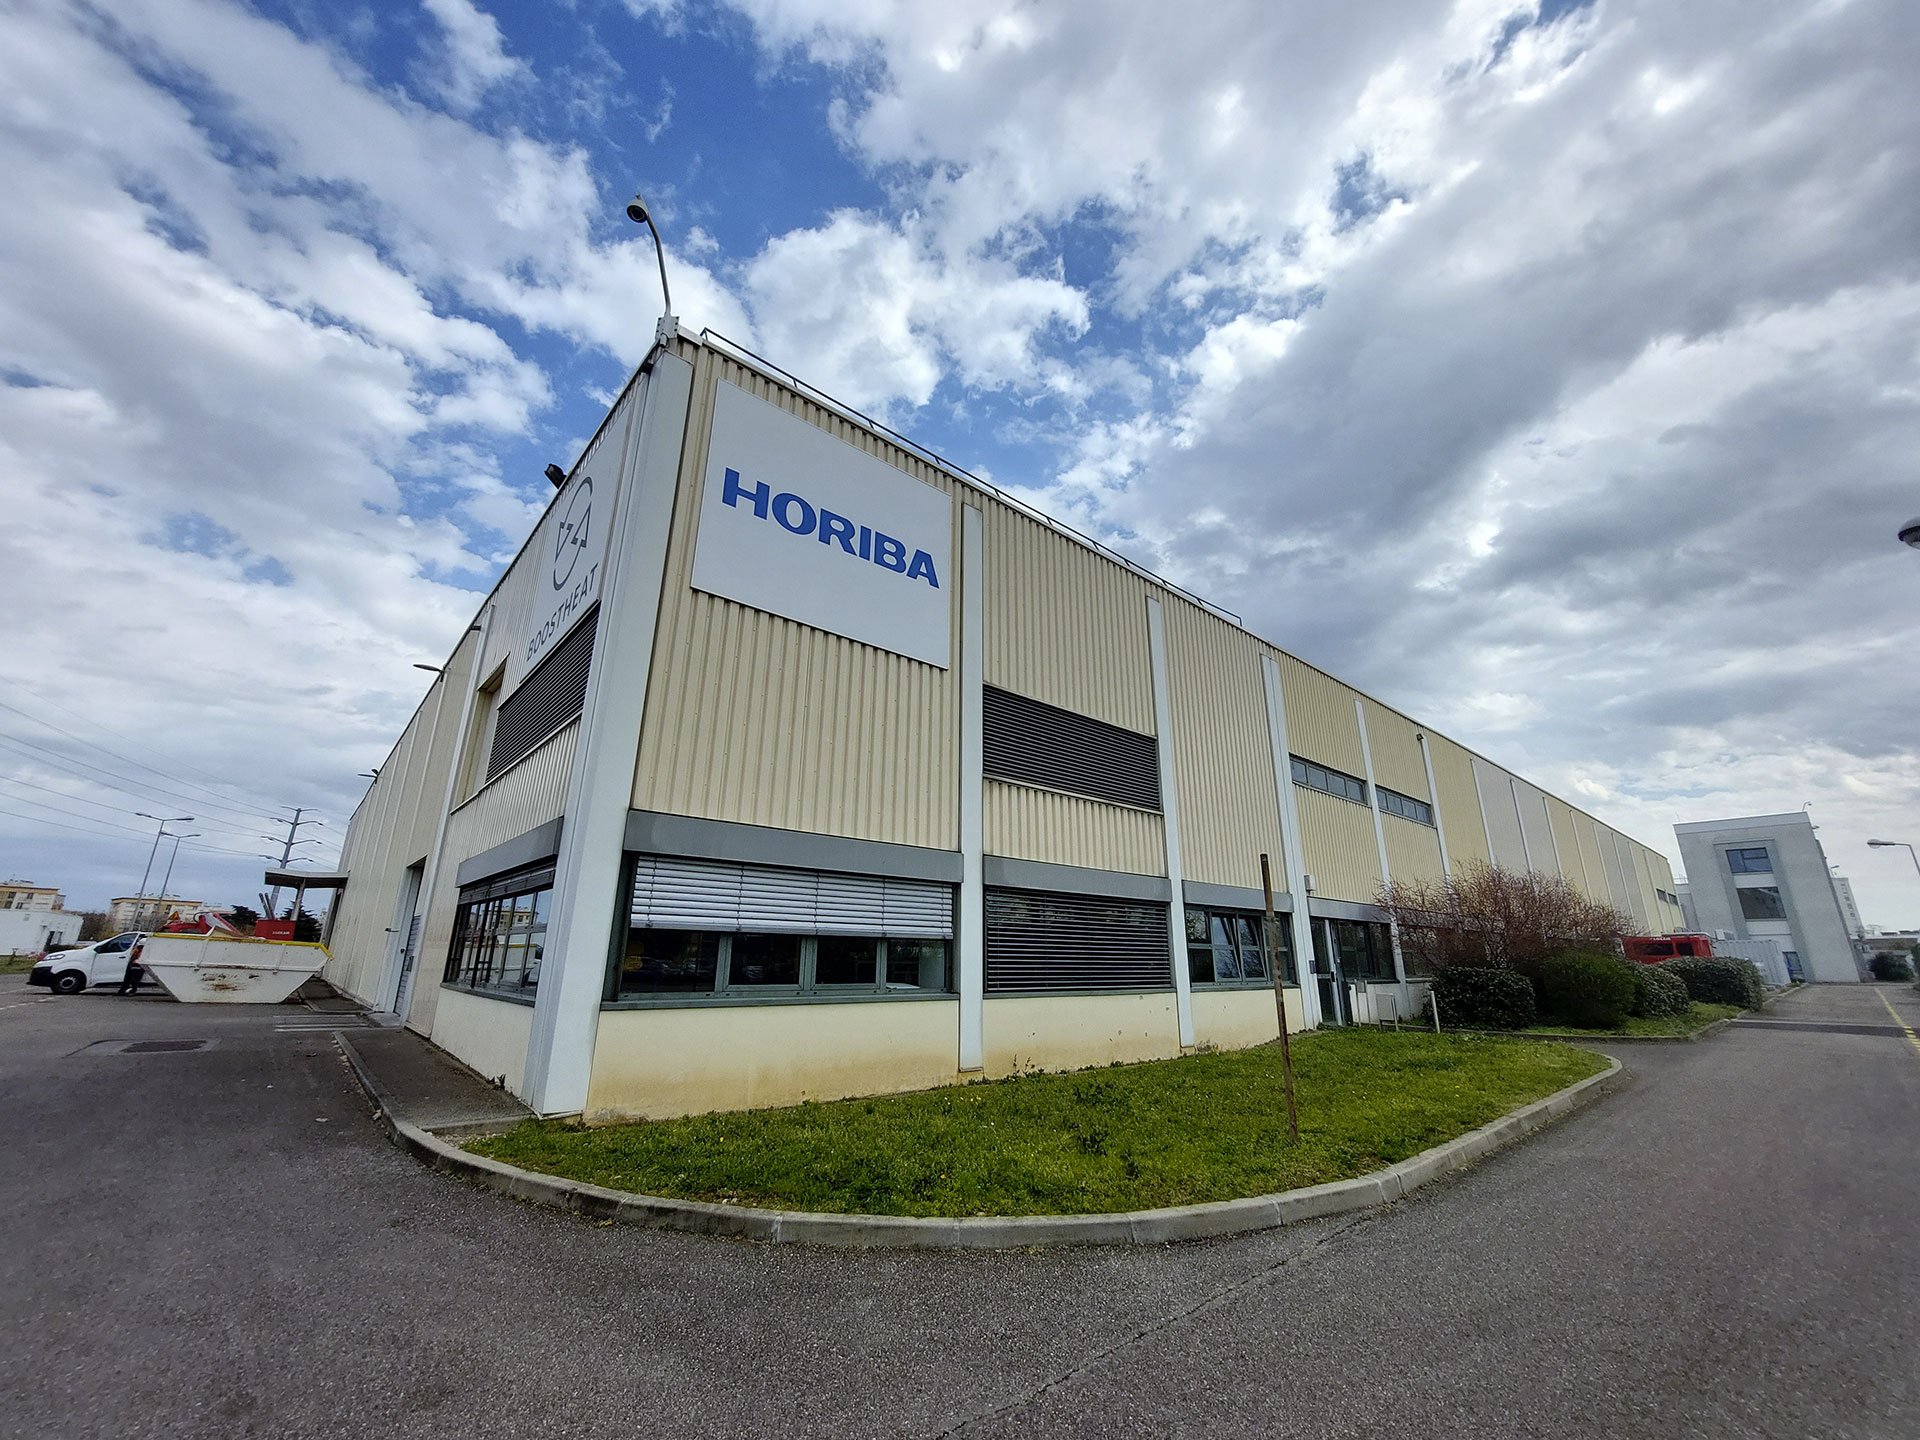 Exterior view of the HORIBA building at the USIN Lyon Parilly site, 41 boulevard Marcel Sembat, Vénissieux (Lyon Parilly Factories urban industrial park, Lyon metropolitan area).